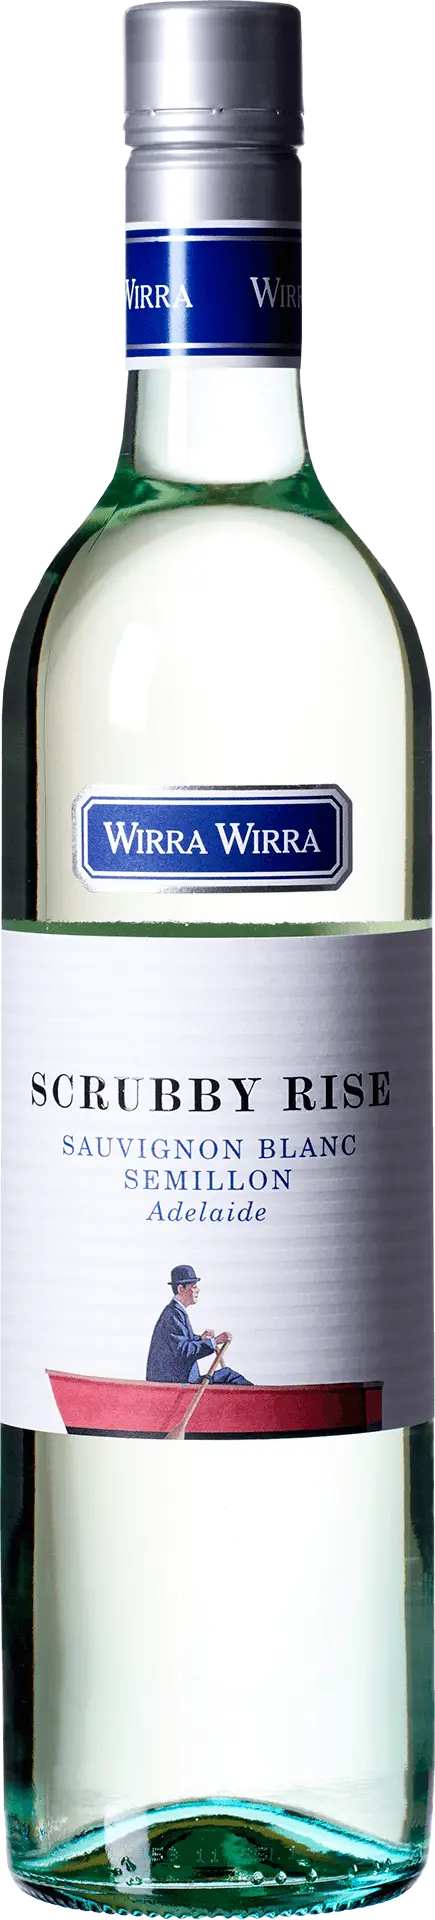 Wirra Wirra - Scrubby Rise Sauvignon Blanc 2020